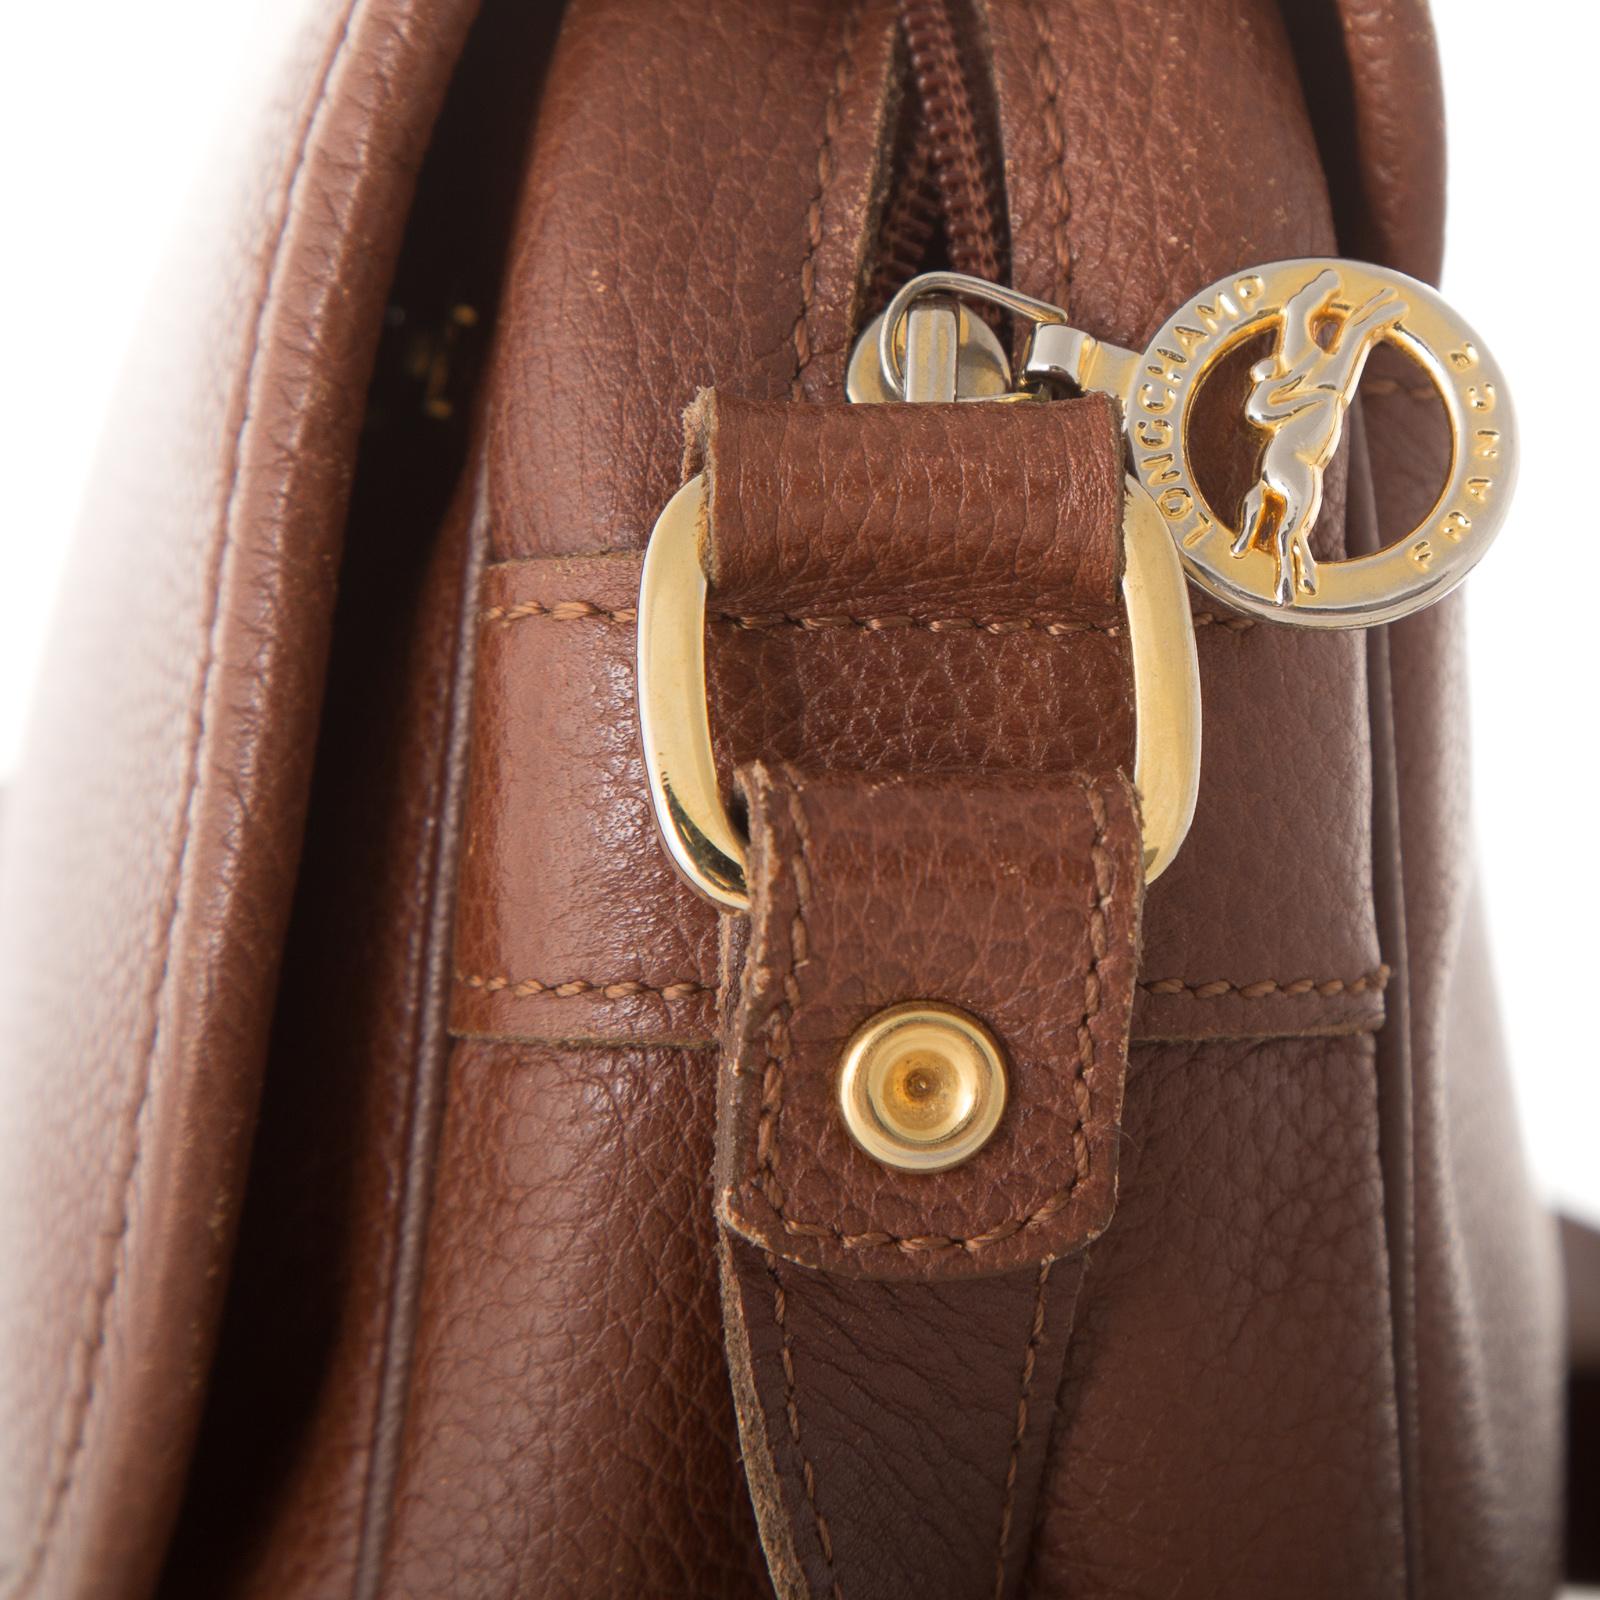 Sold at Auction: Vintage Longchamp Brown Leather Purse